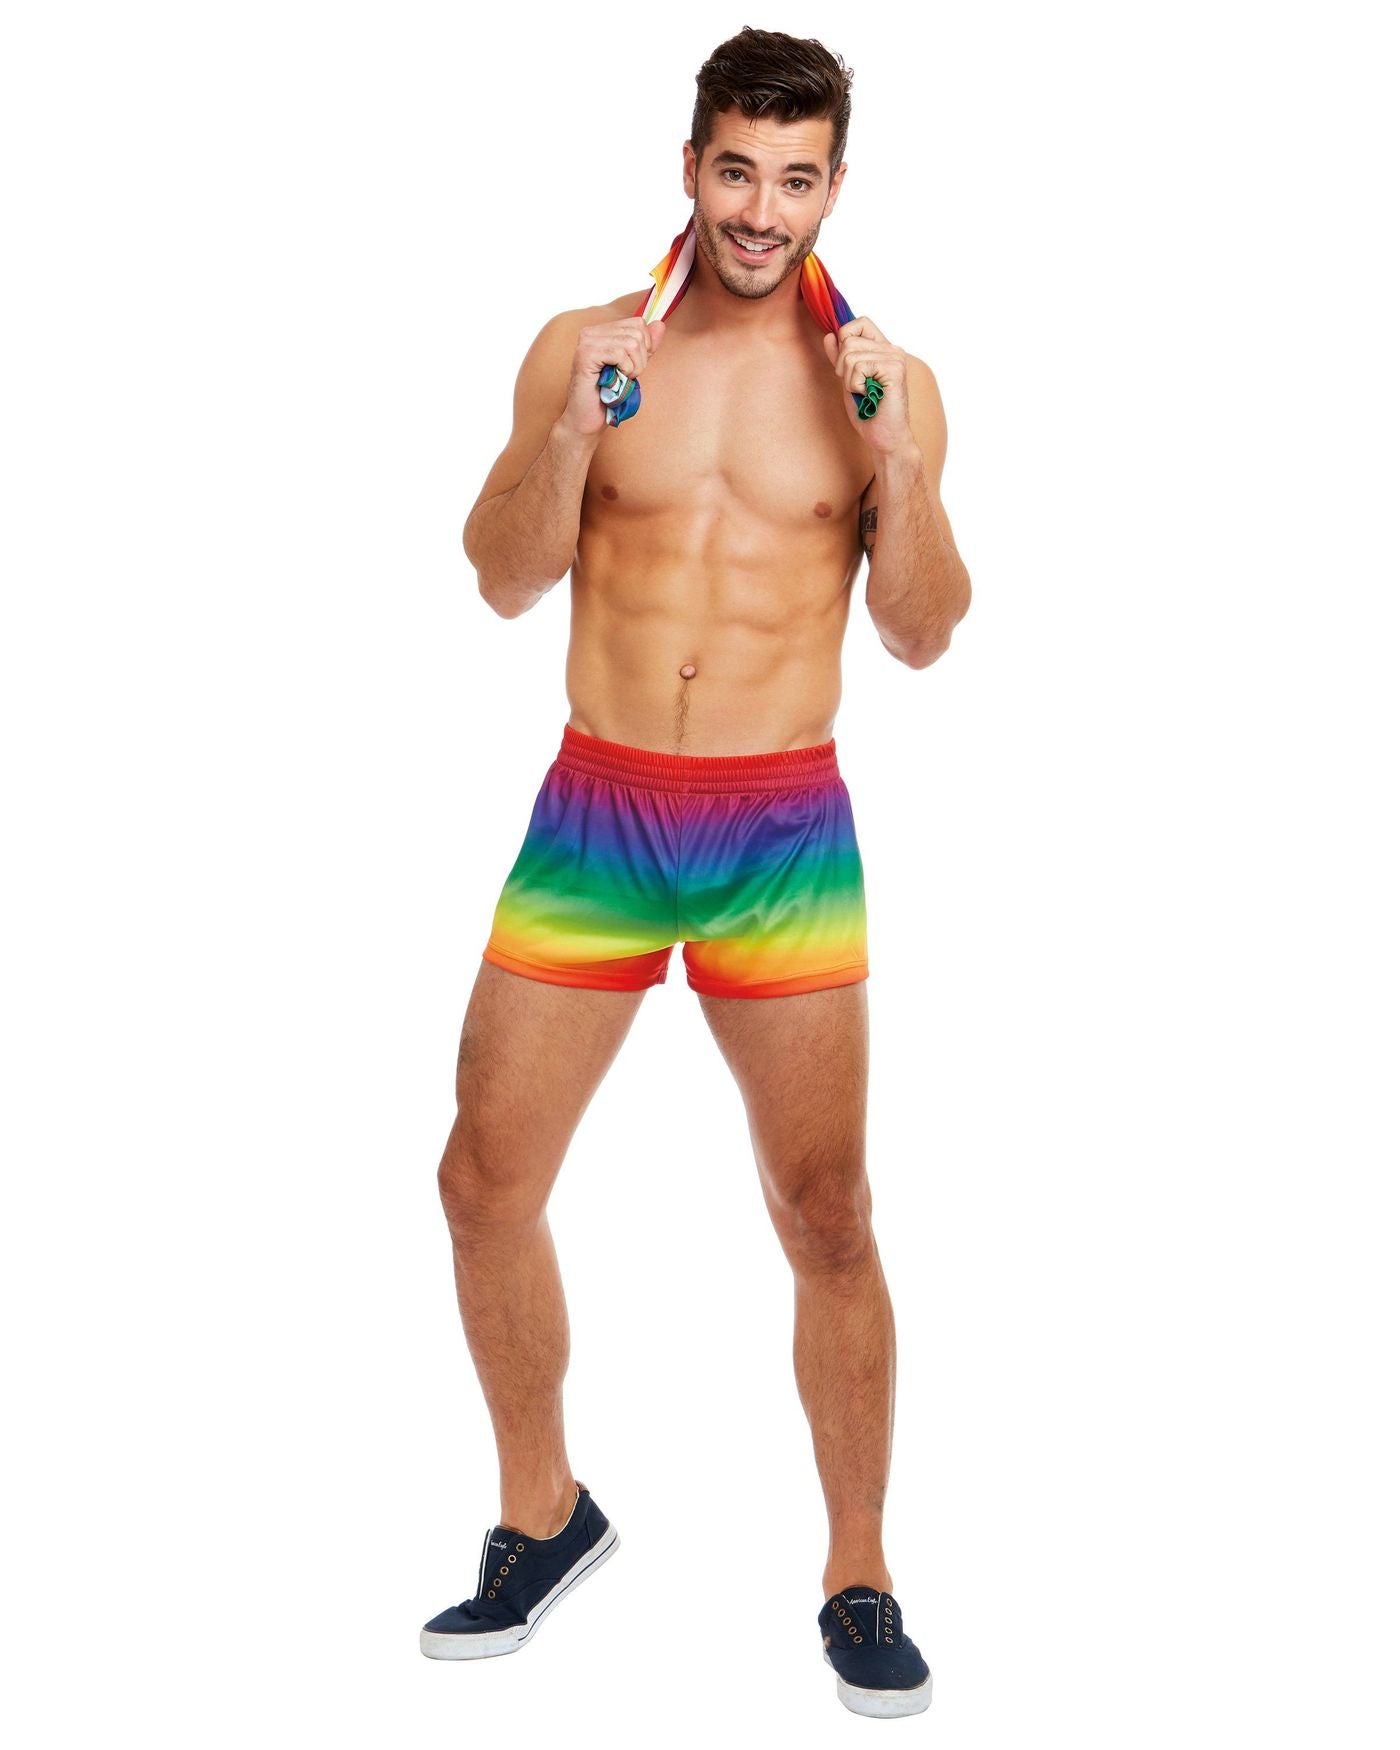 Rainbow Tank Top and Shorts